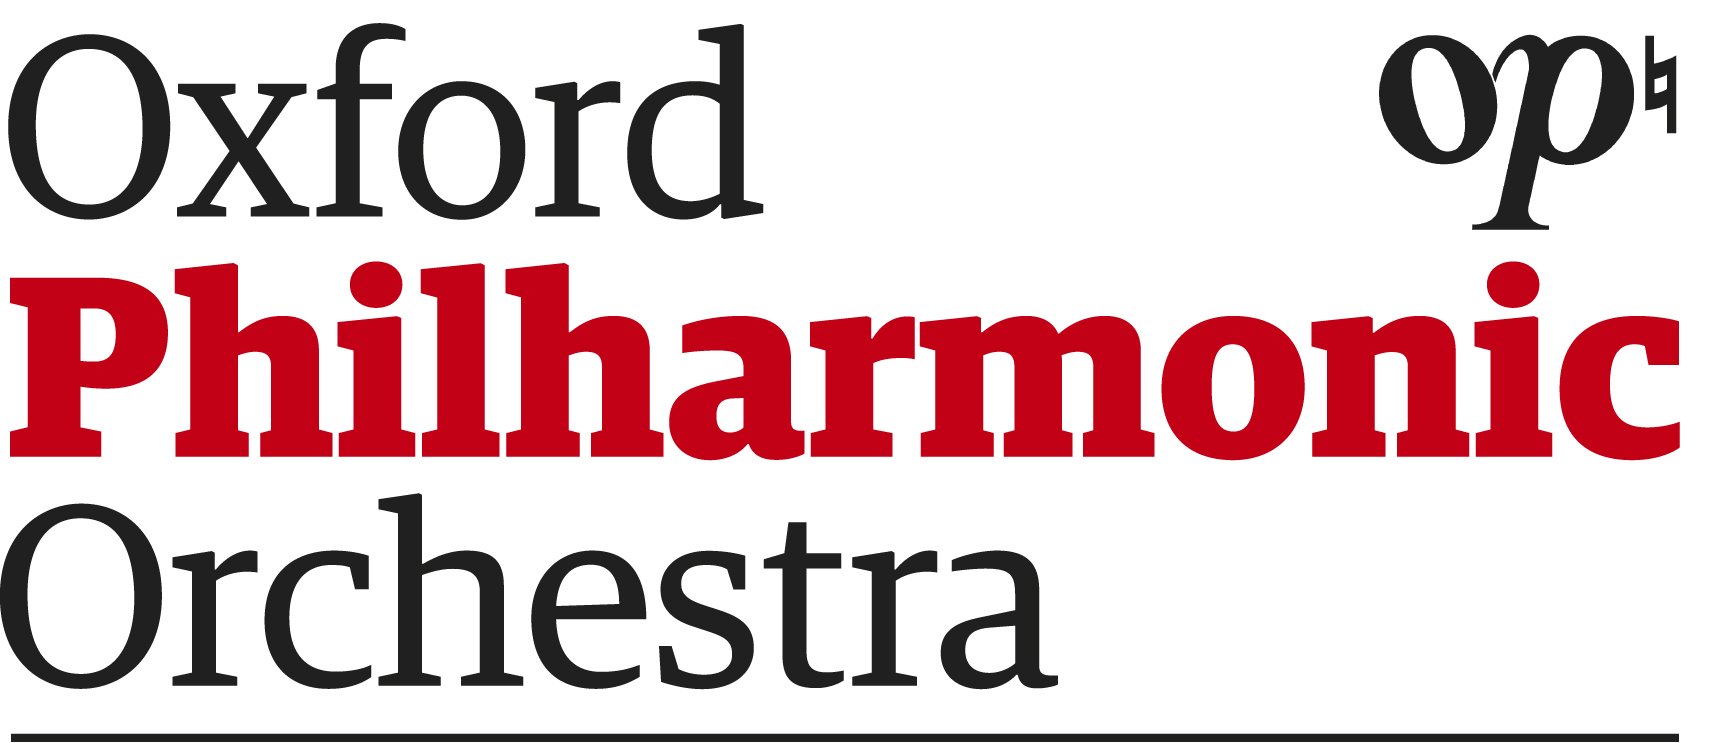 oxford philharmonic orchestra logo.jpg